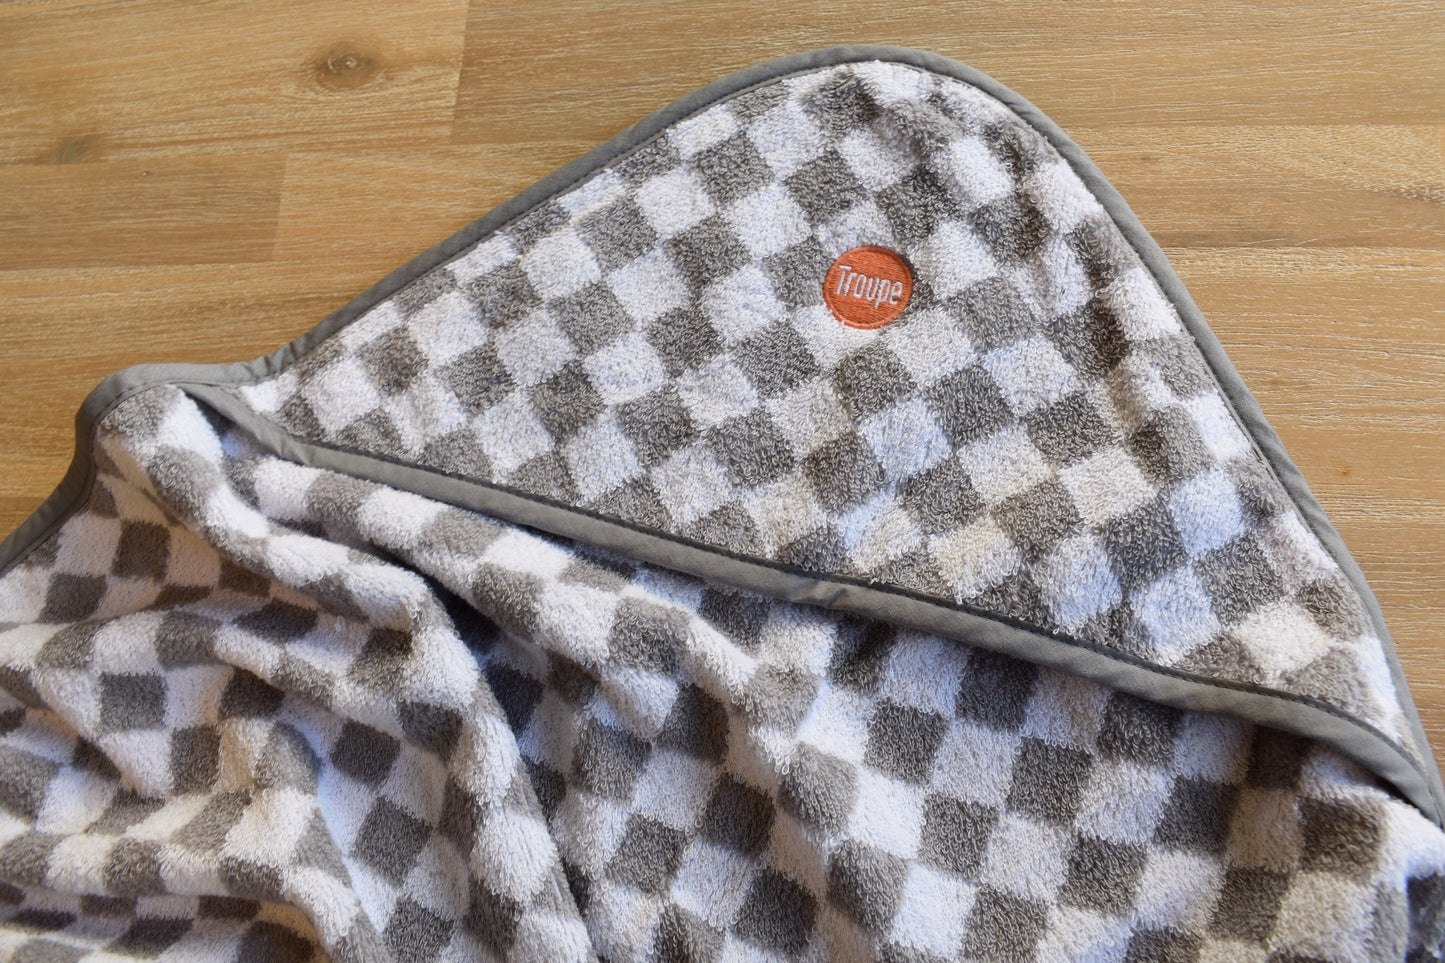 Baby Hooded Towel - Grey Checkerboard